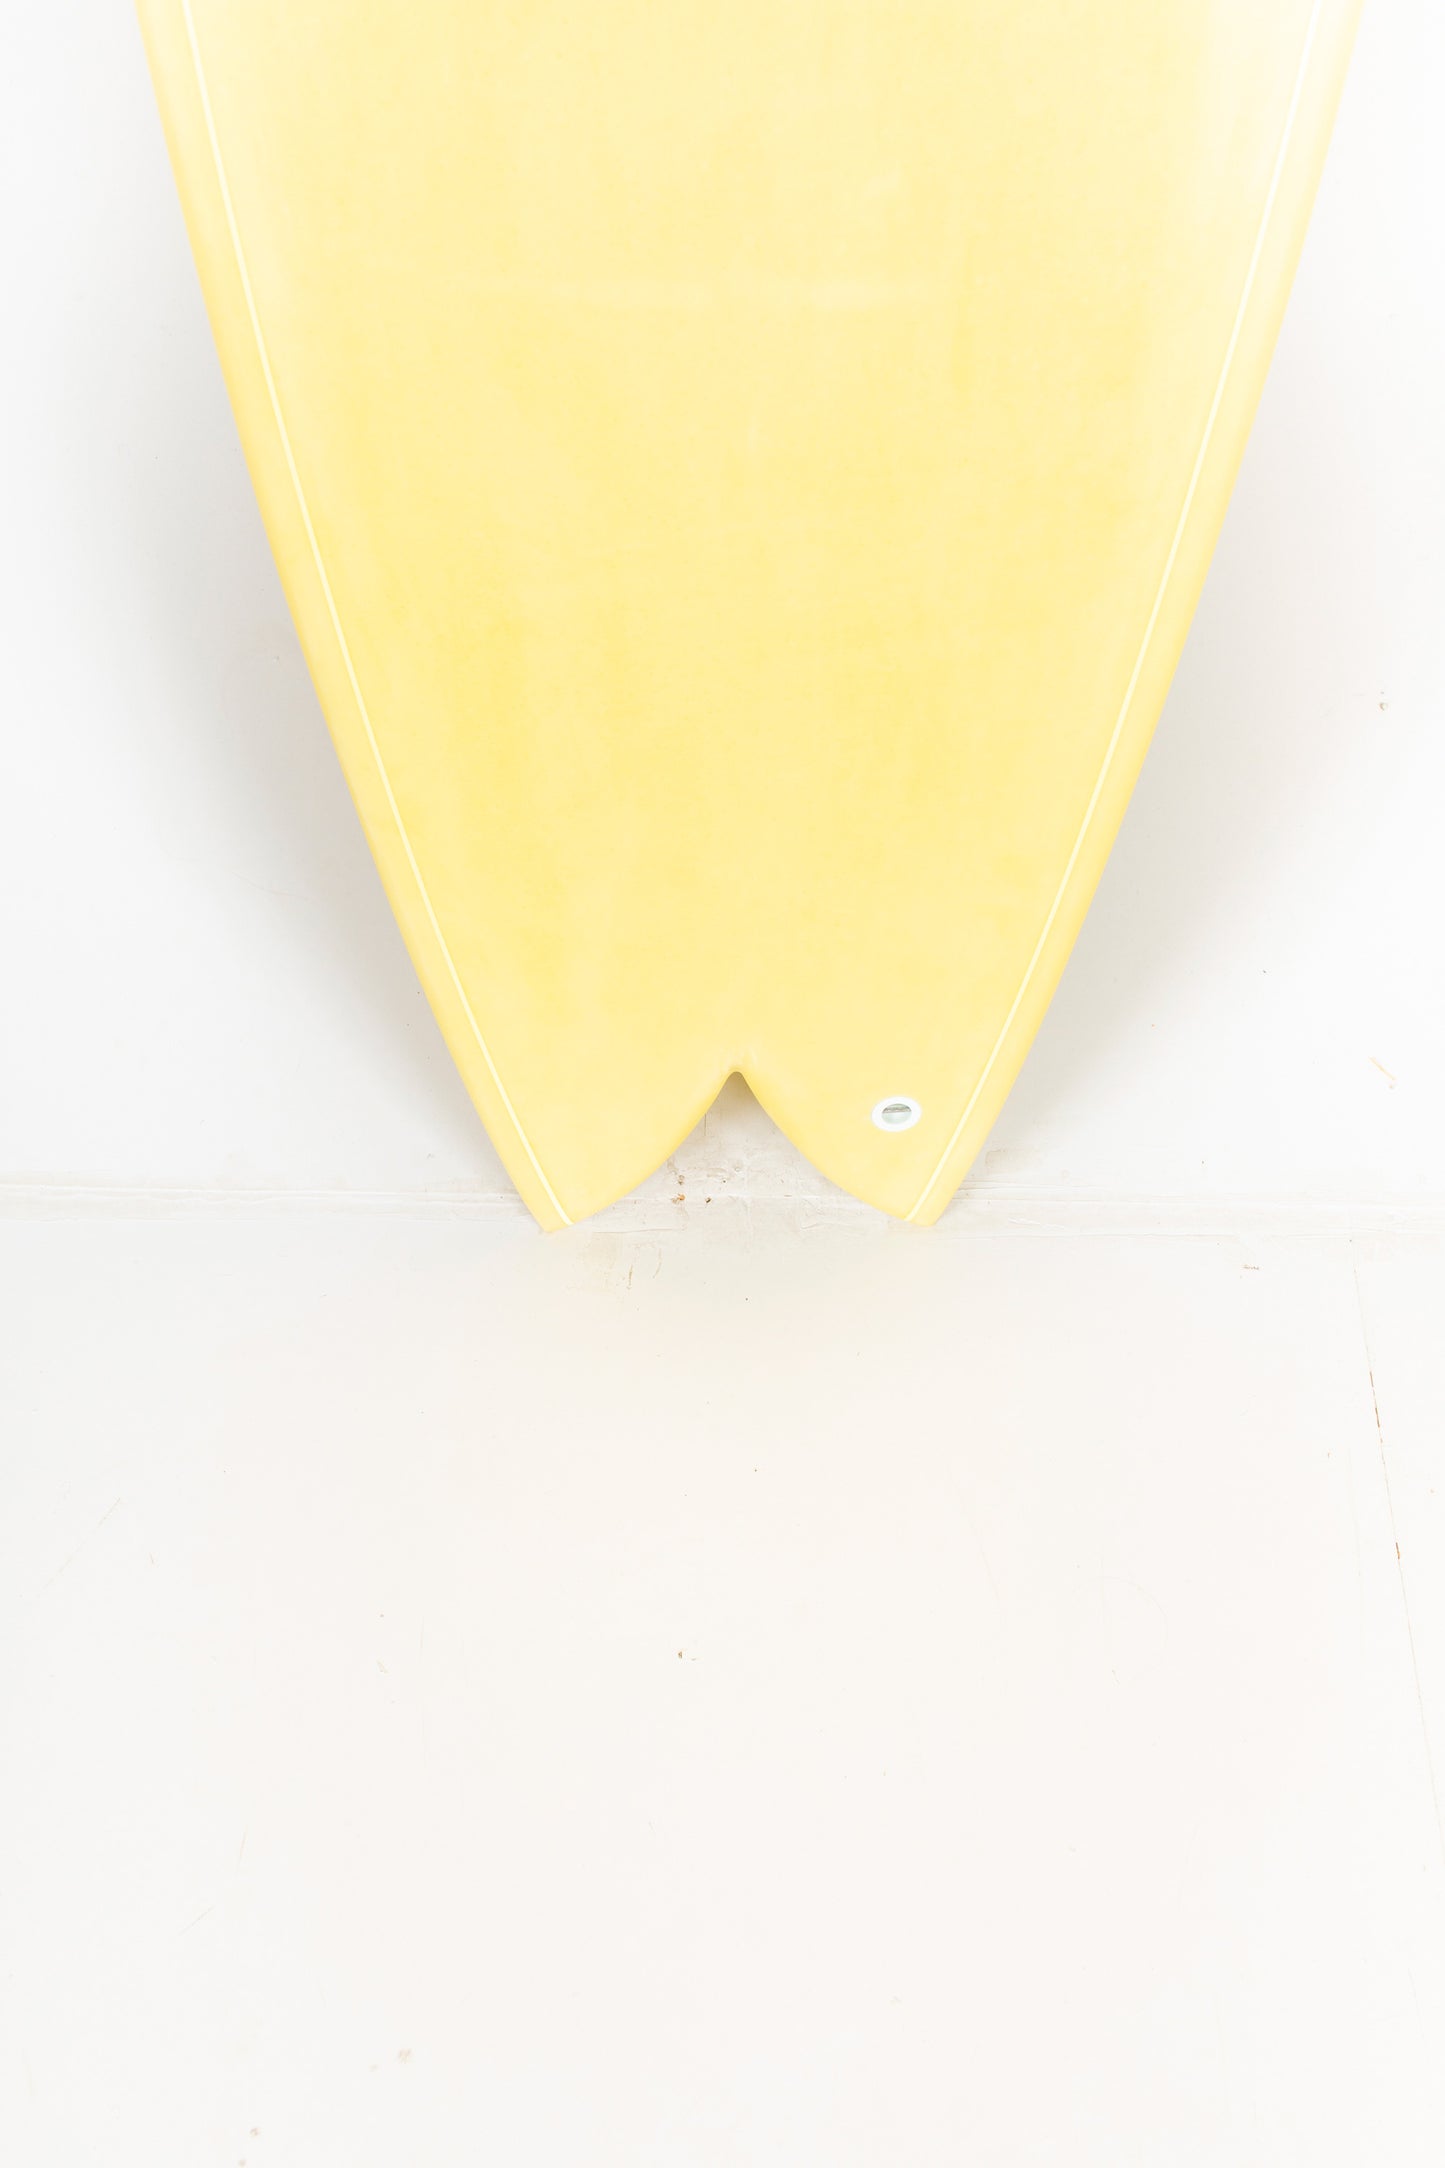 
                  
                    Pukas Surf Shop - Indio Endurance - BIG FISH Sand - 8´0 x 21 3/4 x 3 - 58,7L
                  
                